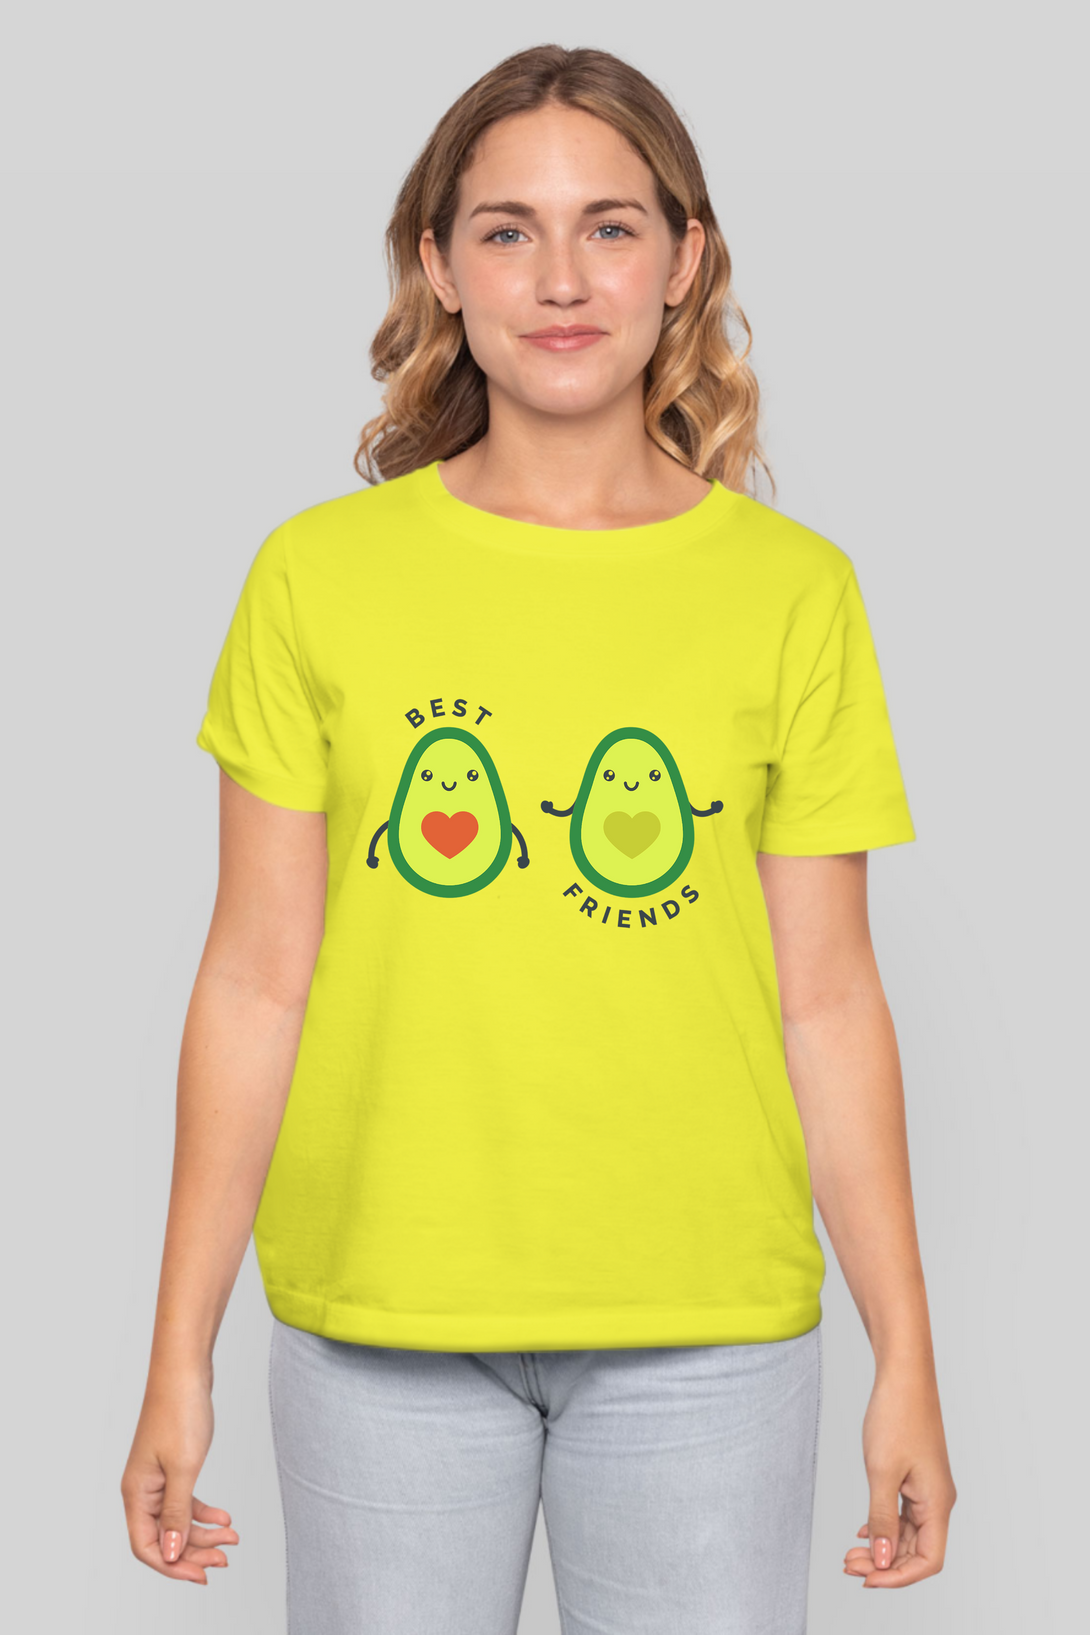 Avocado Friends Printed T-Shirt For Women - WowWaves - 8